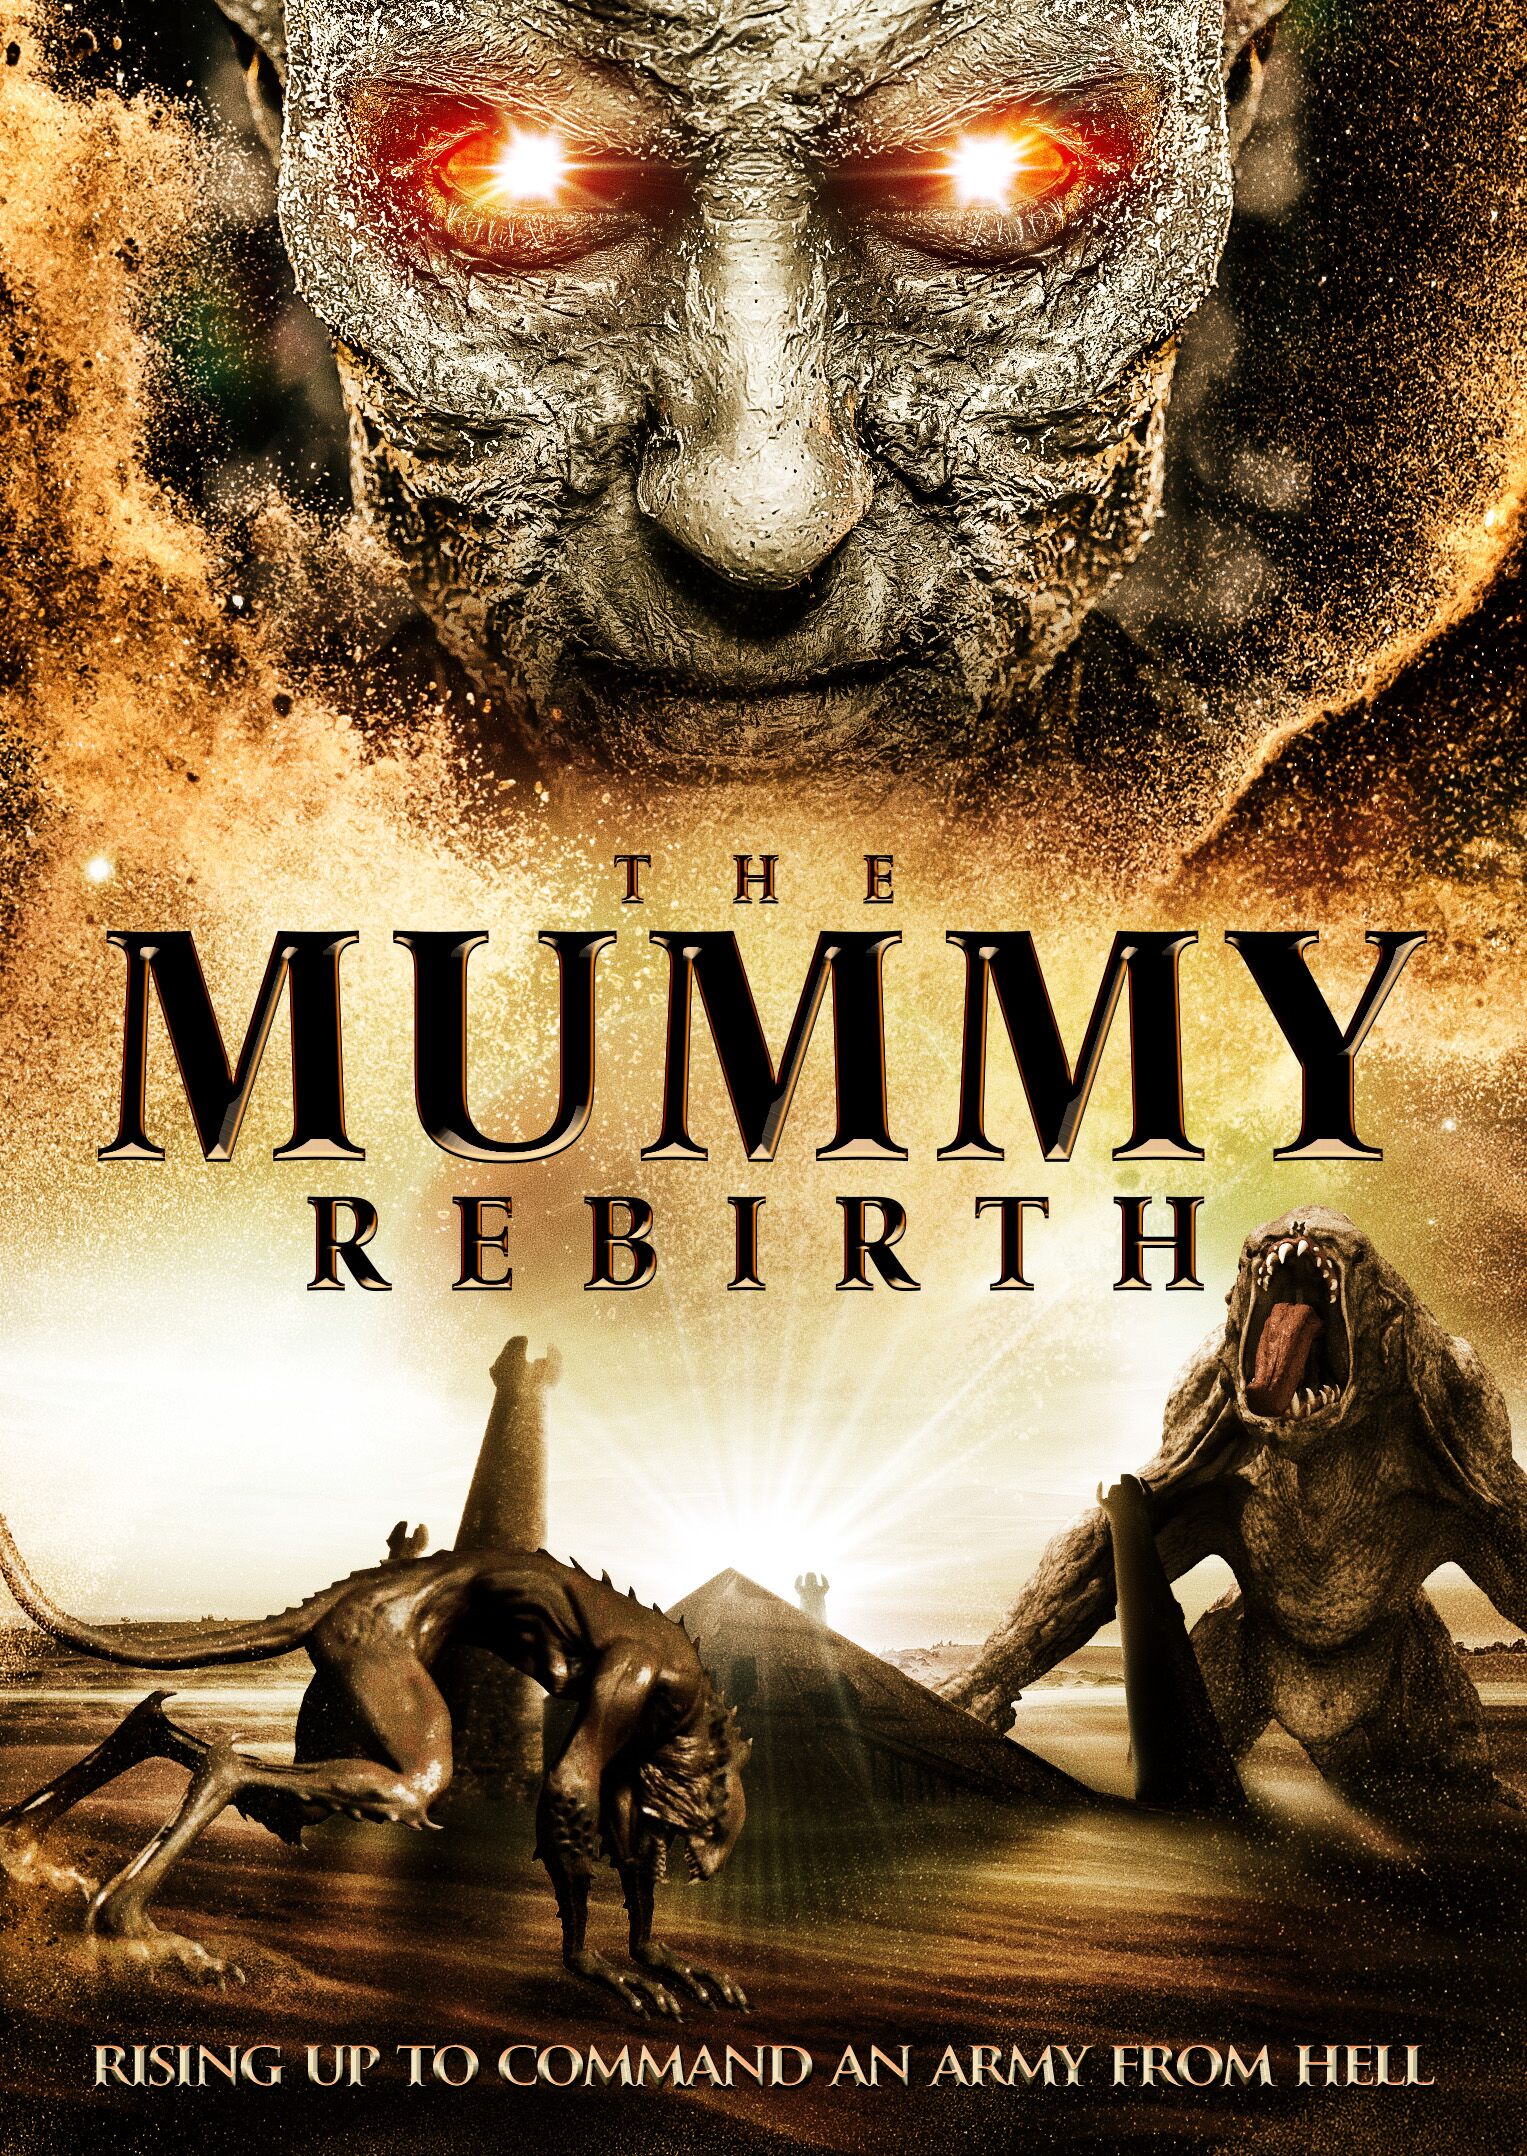 The Mummy 5 Dublaj izle Sinema Paketi geniş arşivi ile sinema